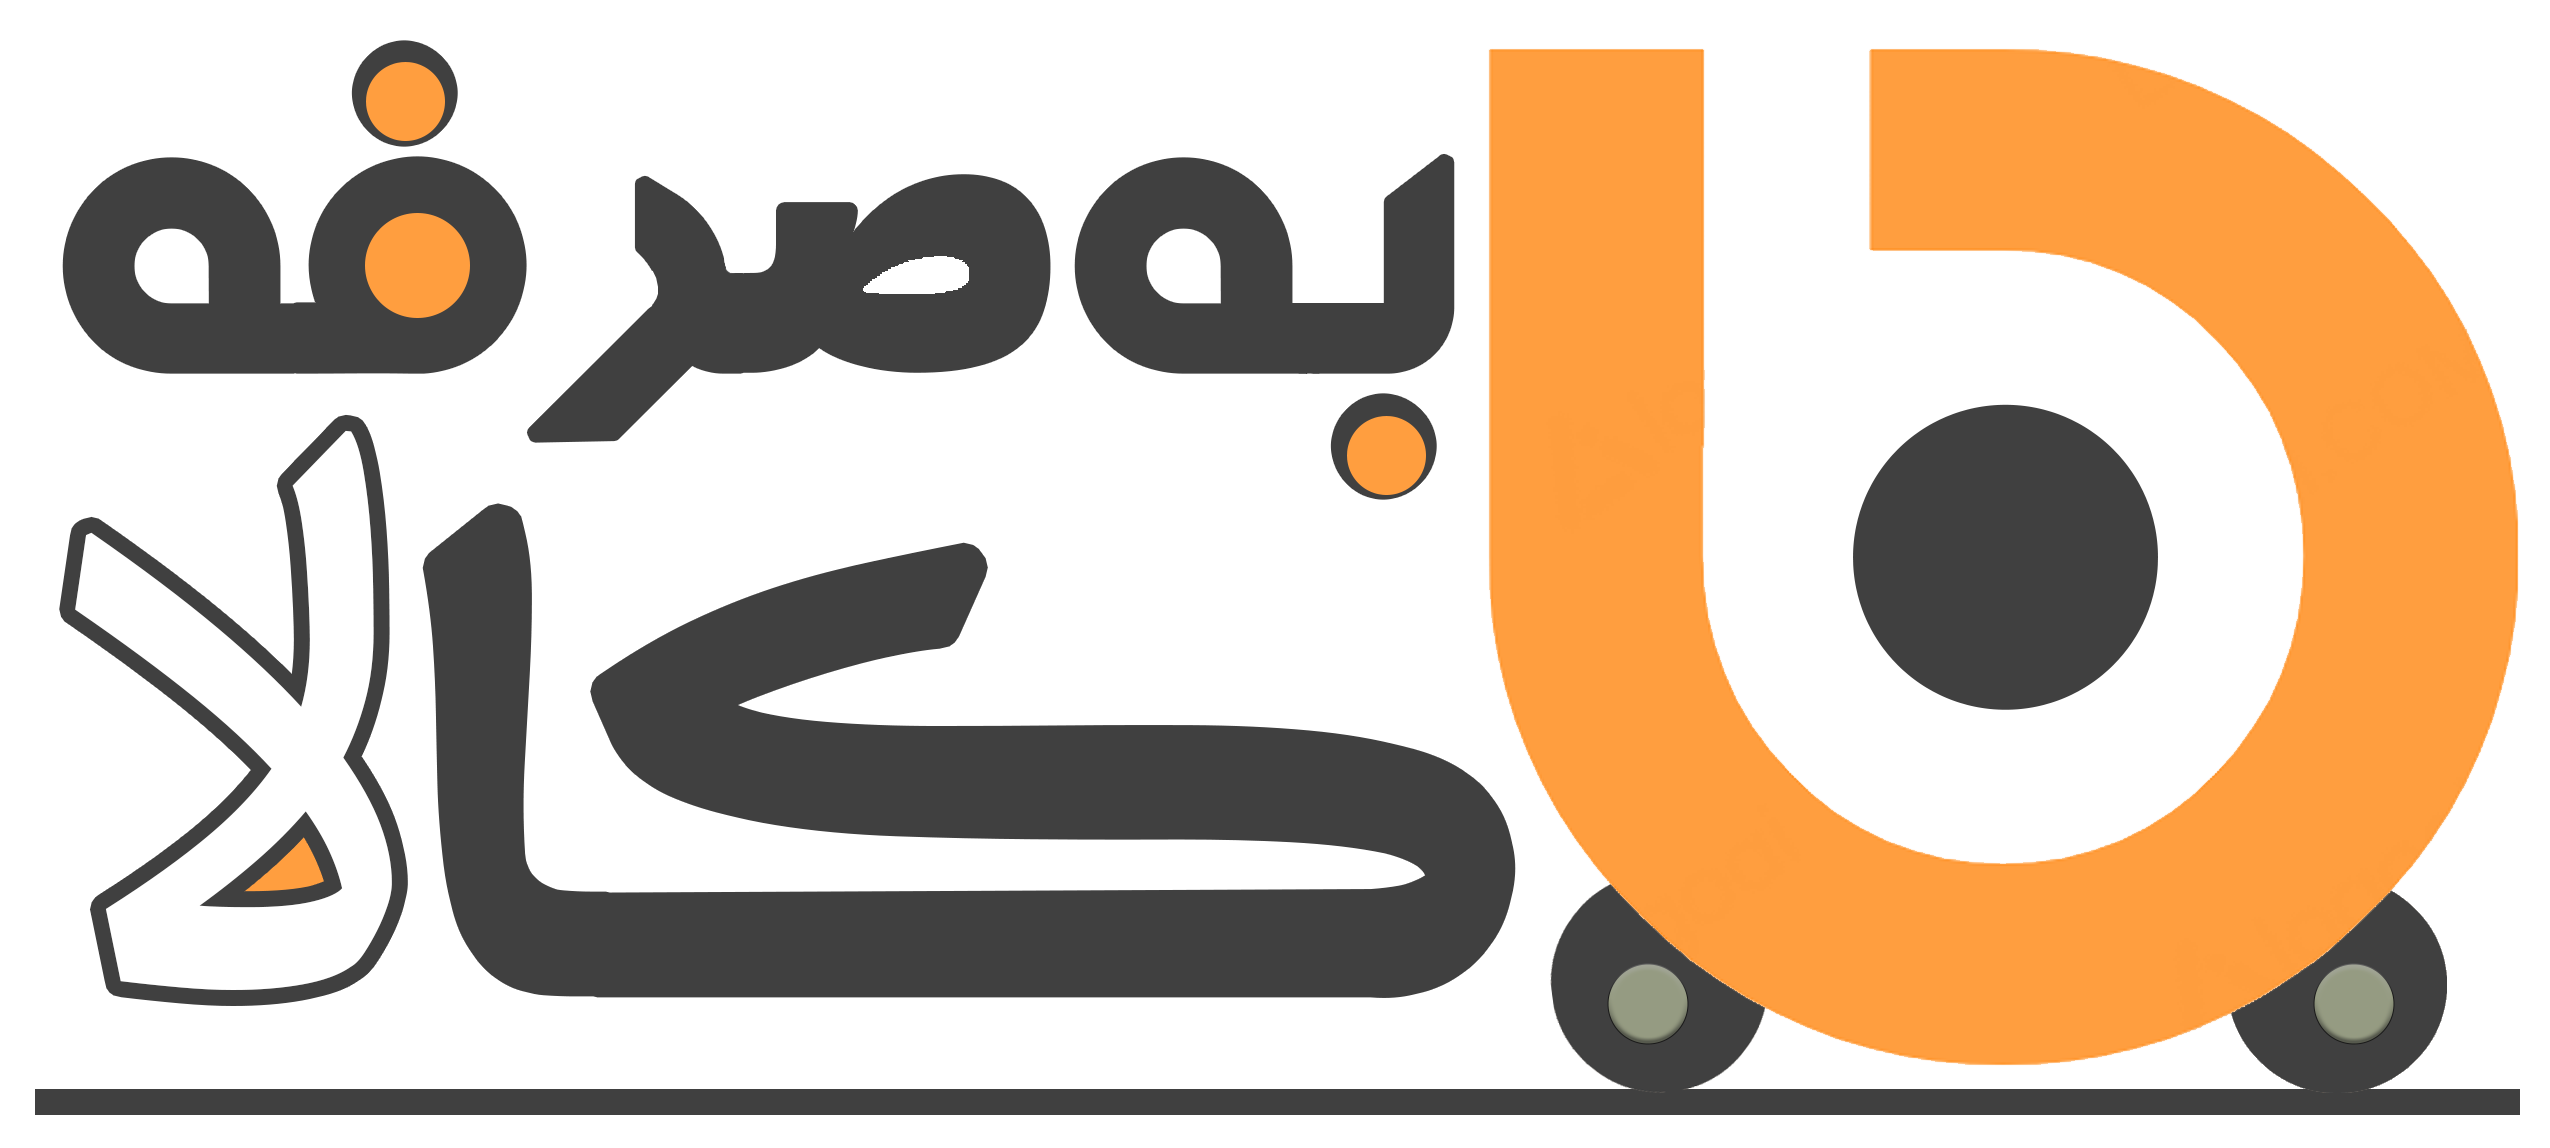 brsarfekala.logo